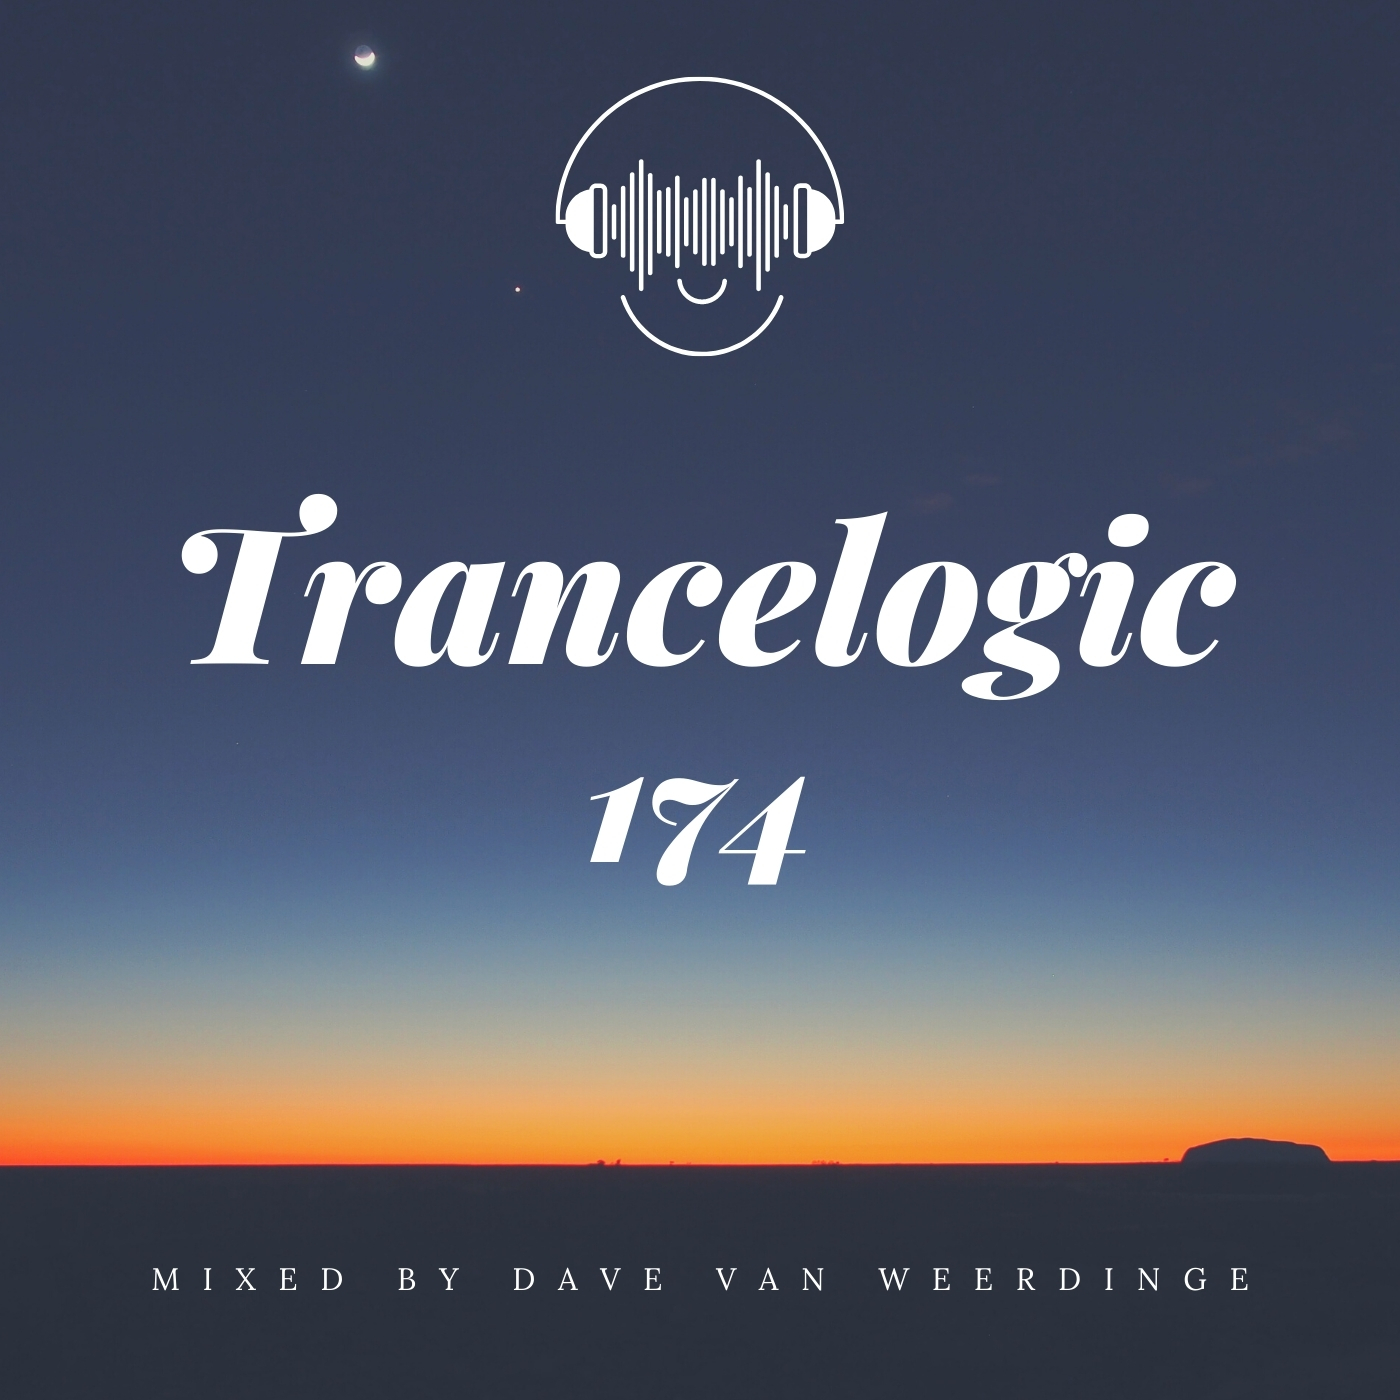 Trancelogic 174 by Dave van Weerdinge